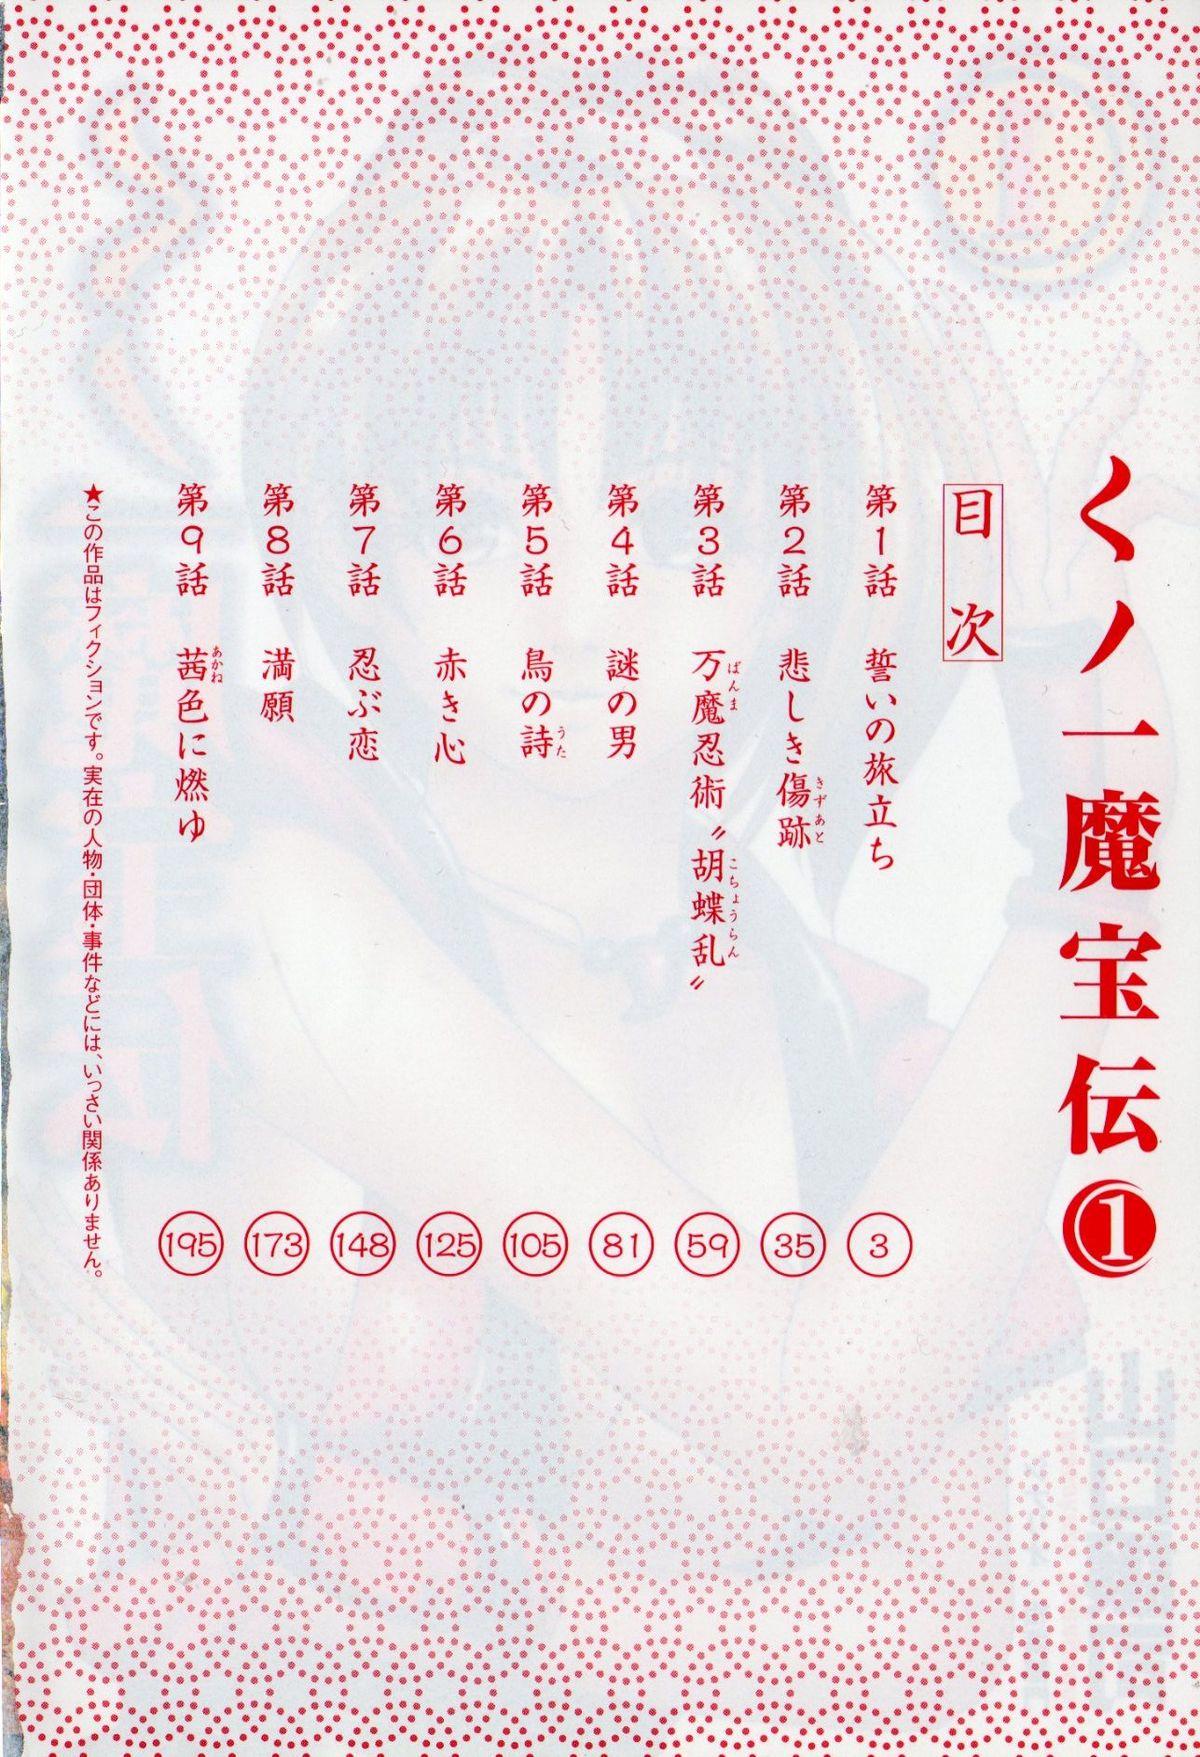 Kunoichi Mahouden volume 1 3